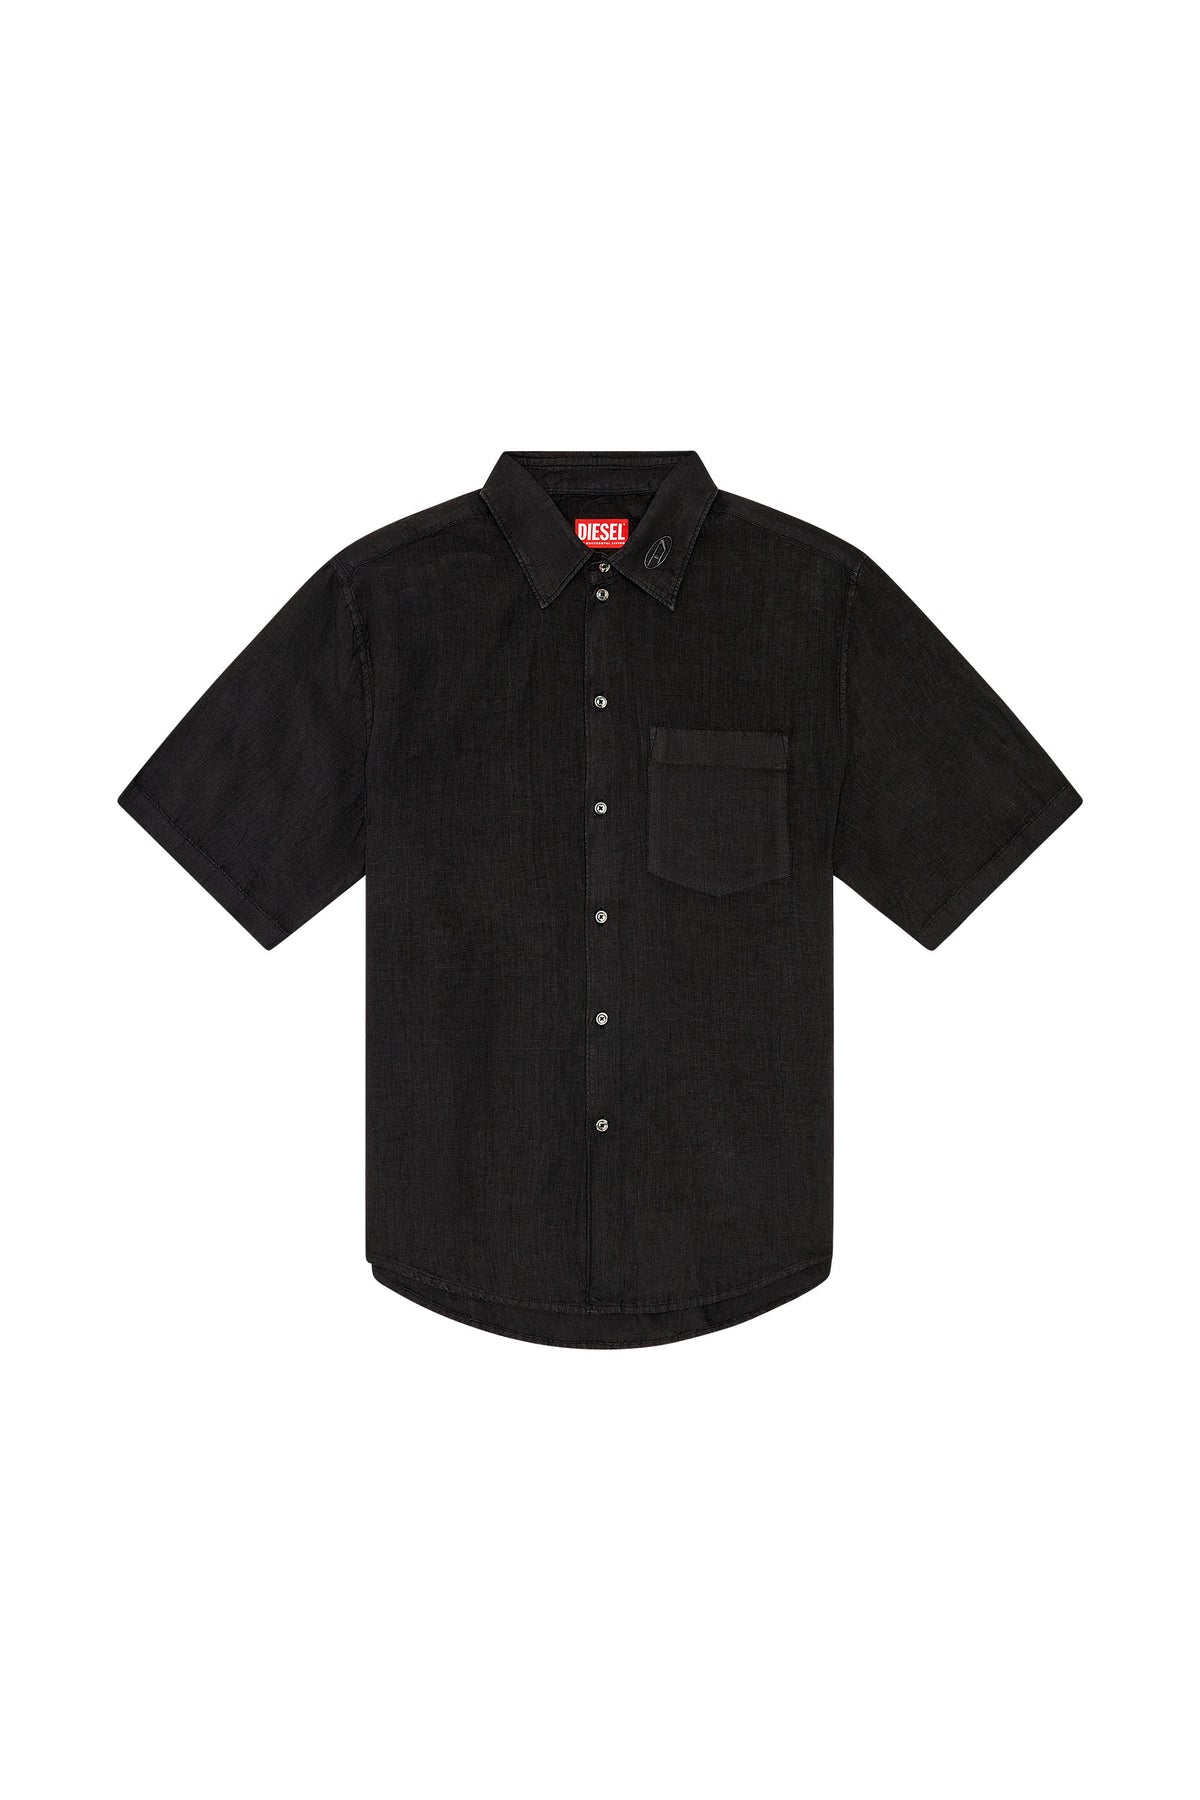 DIESEL Emil S/S Shirt - Black